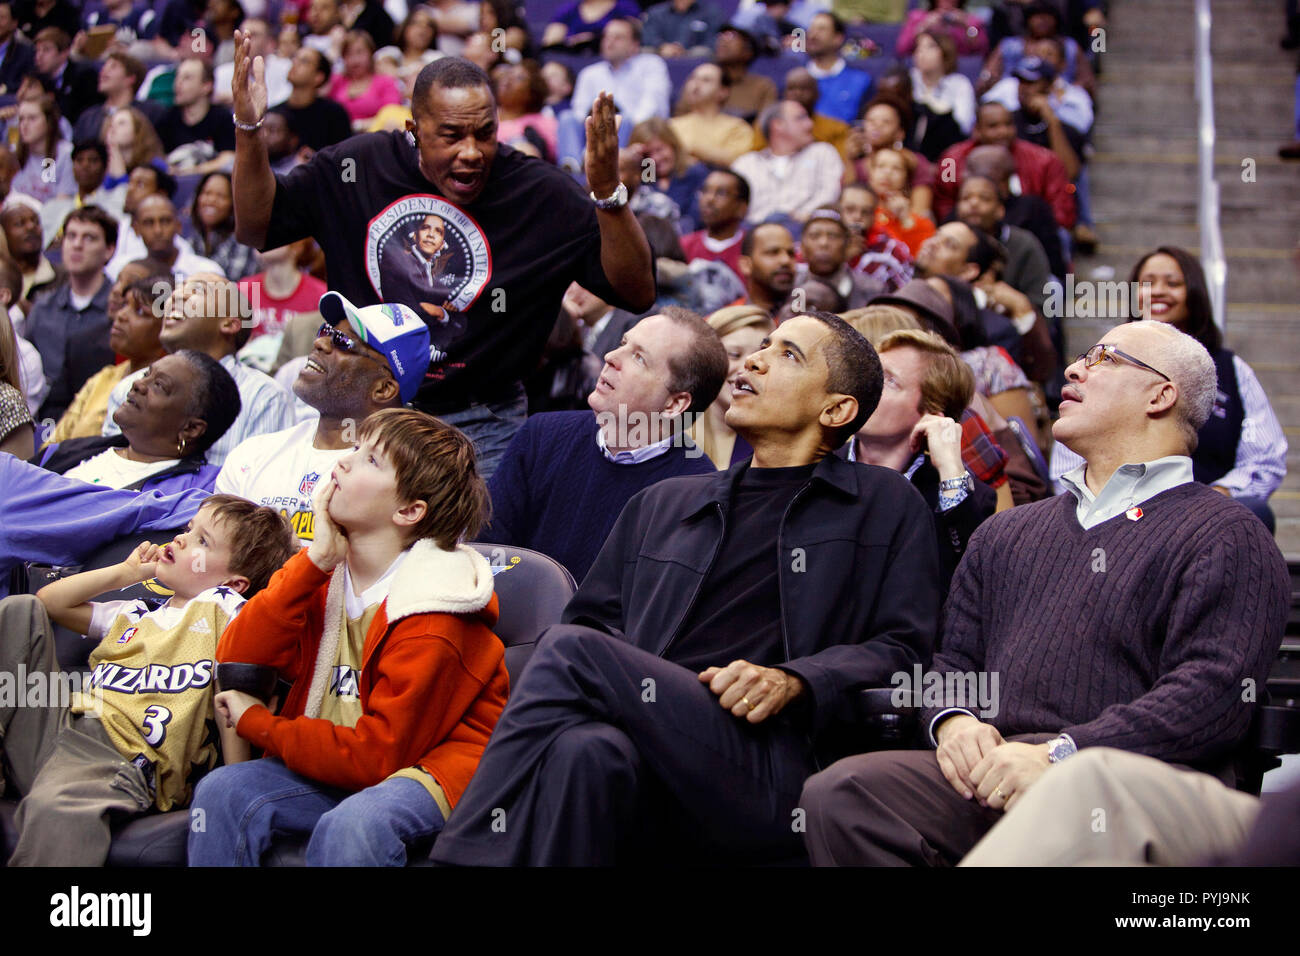 President Barack Obama attends a Washington Wizards vs Chicago Bulls basketball game at the Verizon Center, Washington, D.C 2/27/09. Stock Photo